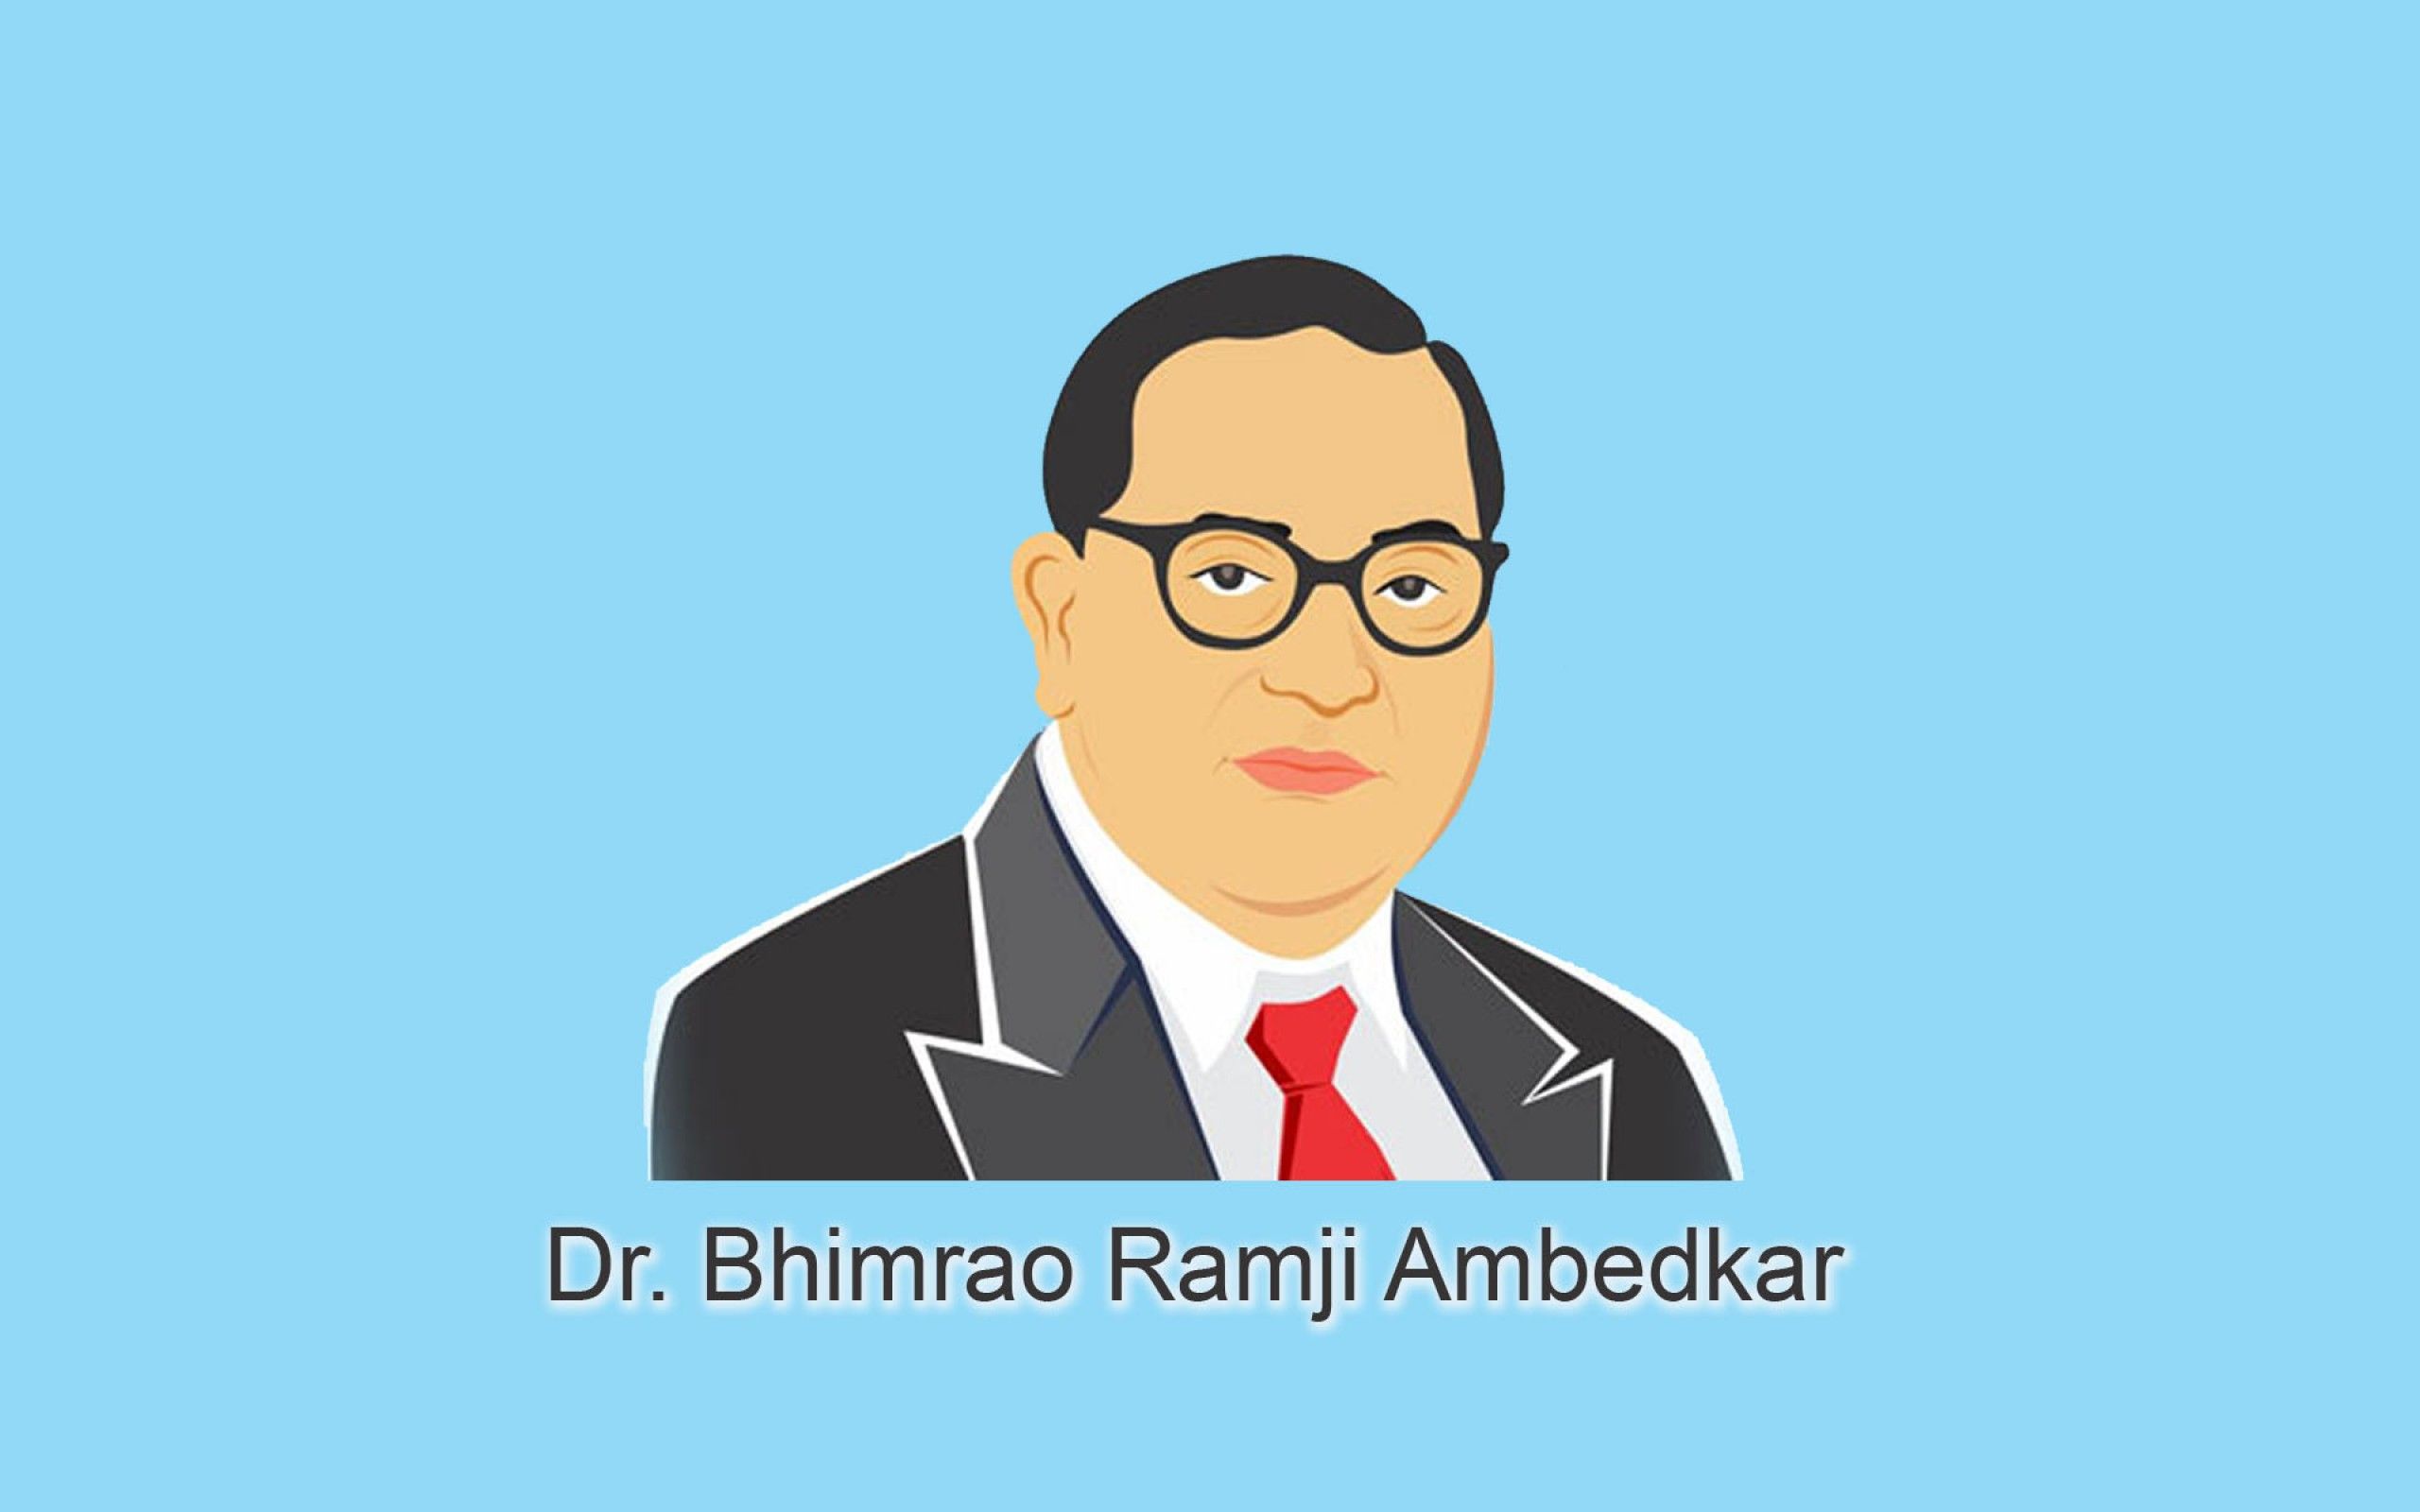 Dr Bhimrao Ramji Ambedkar HD wallpaper.com